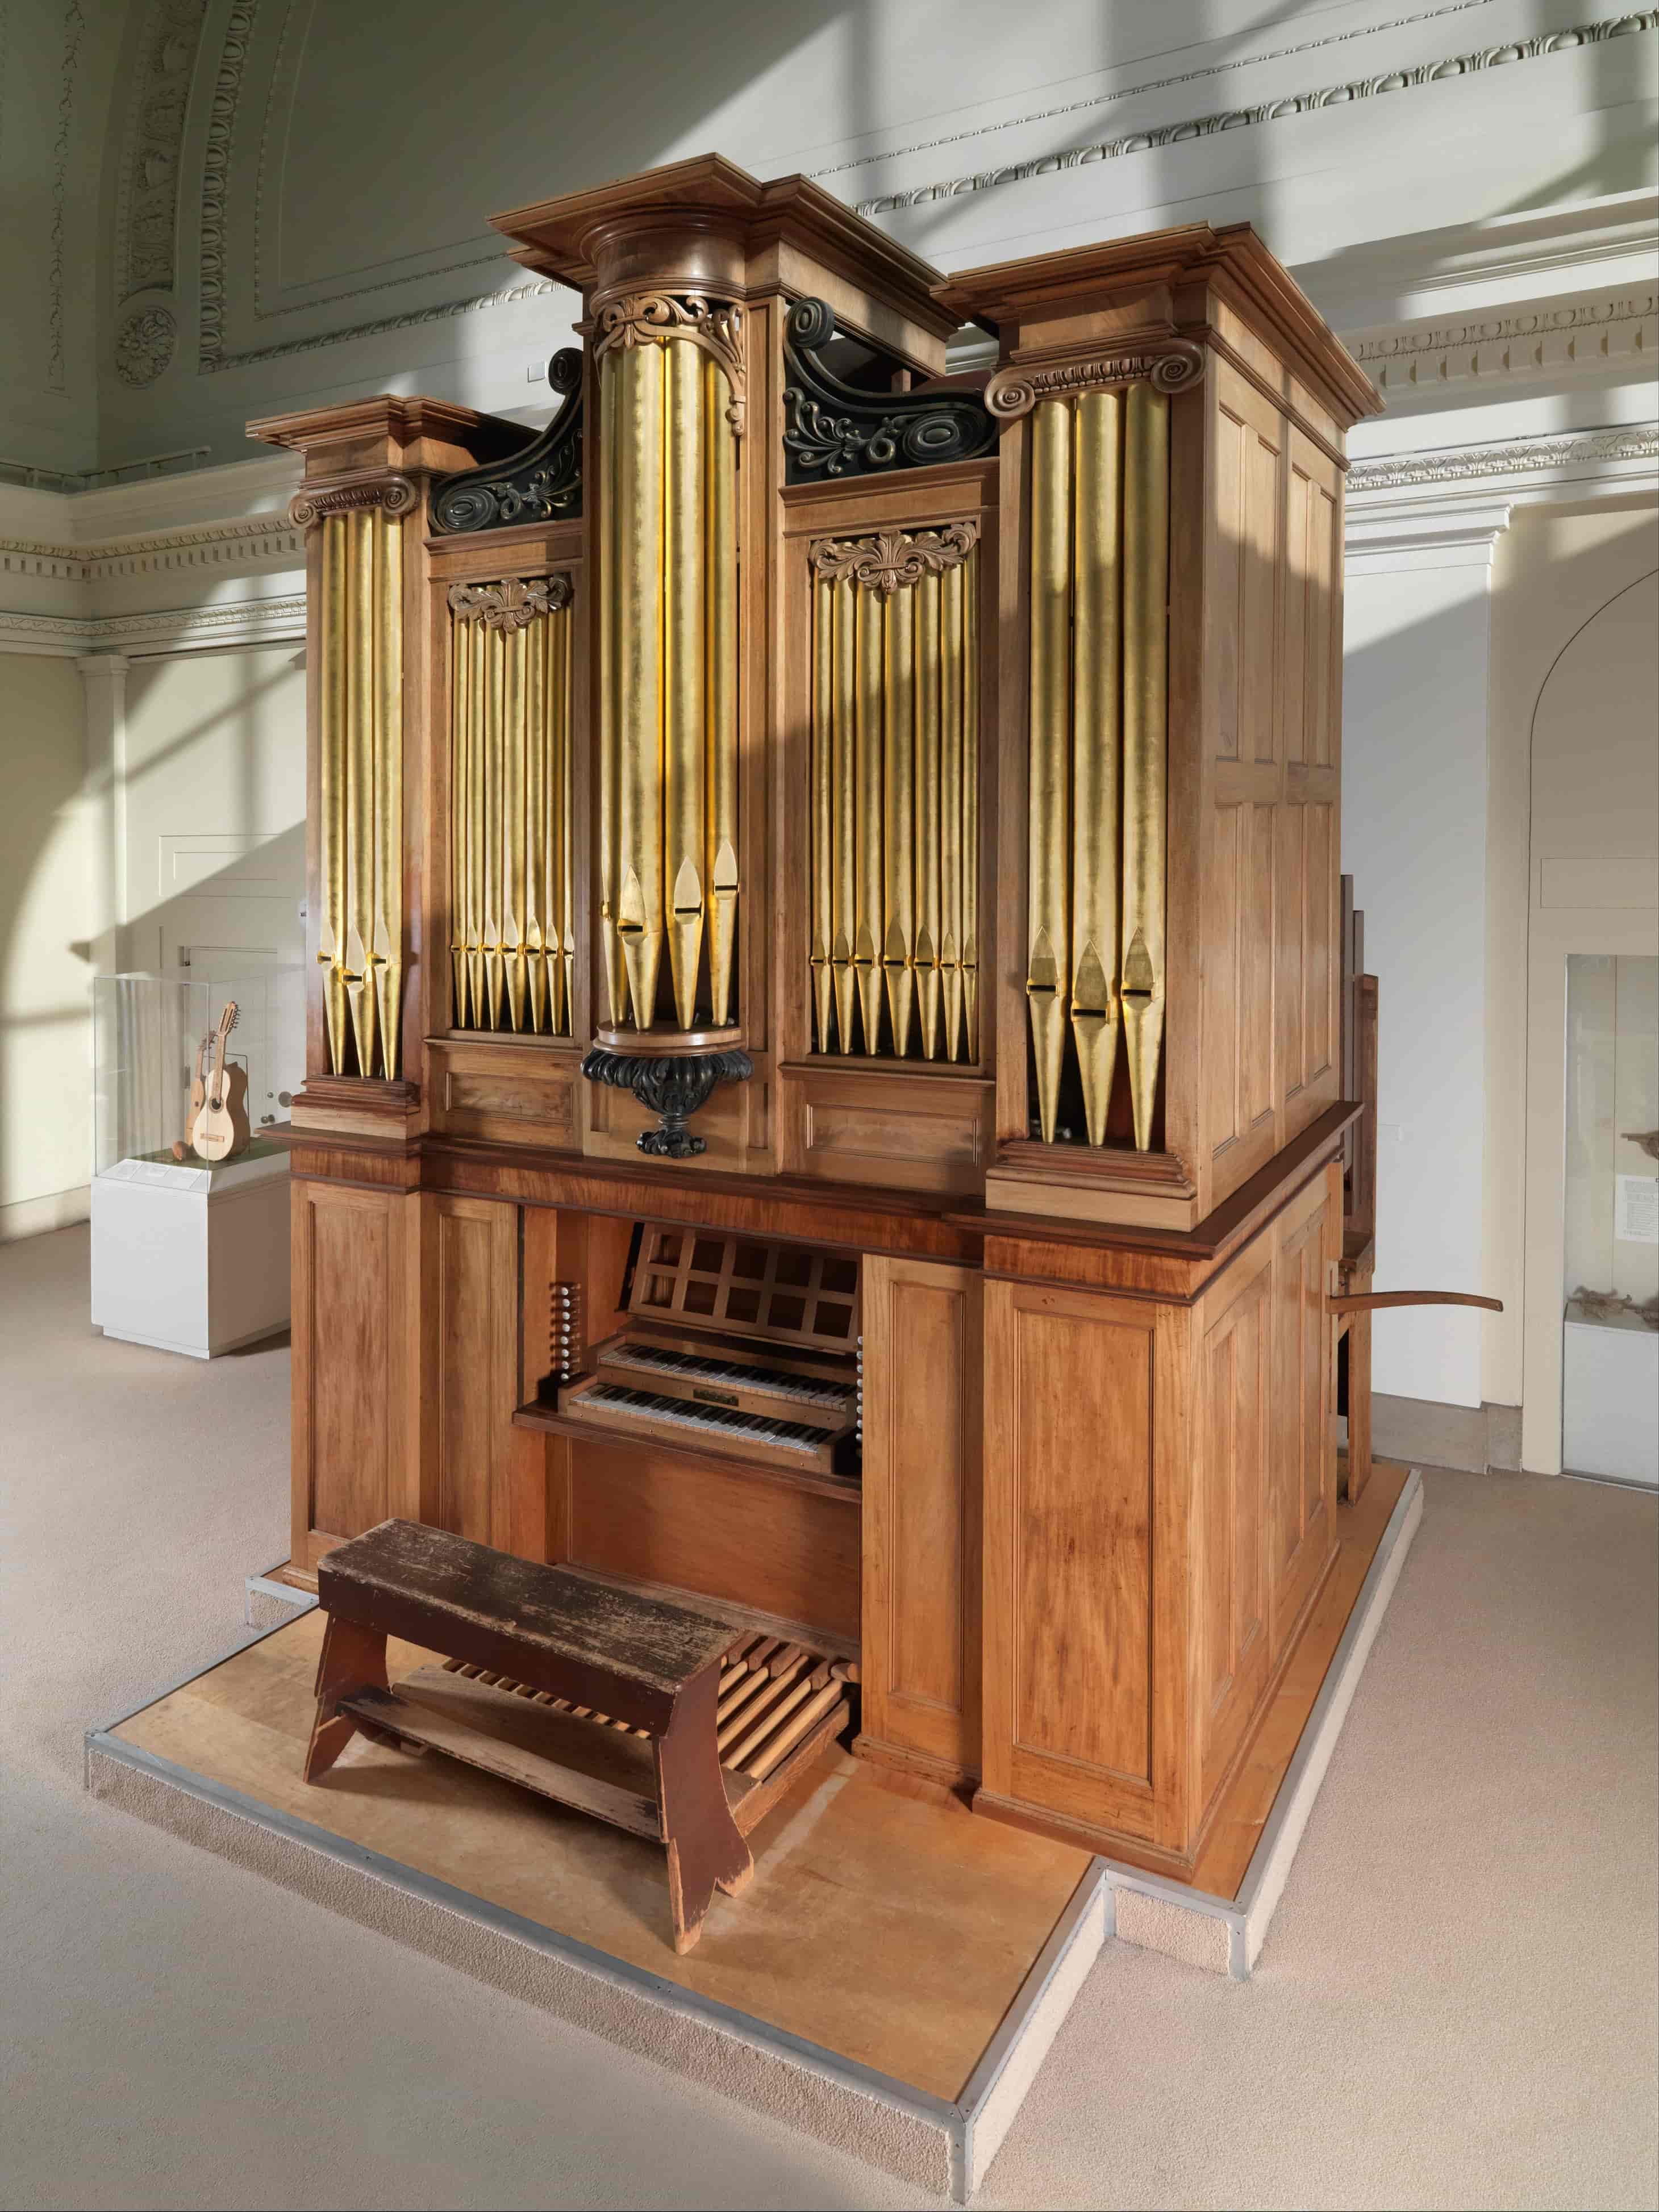 Bareo Interior Design Organ History